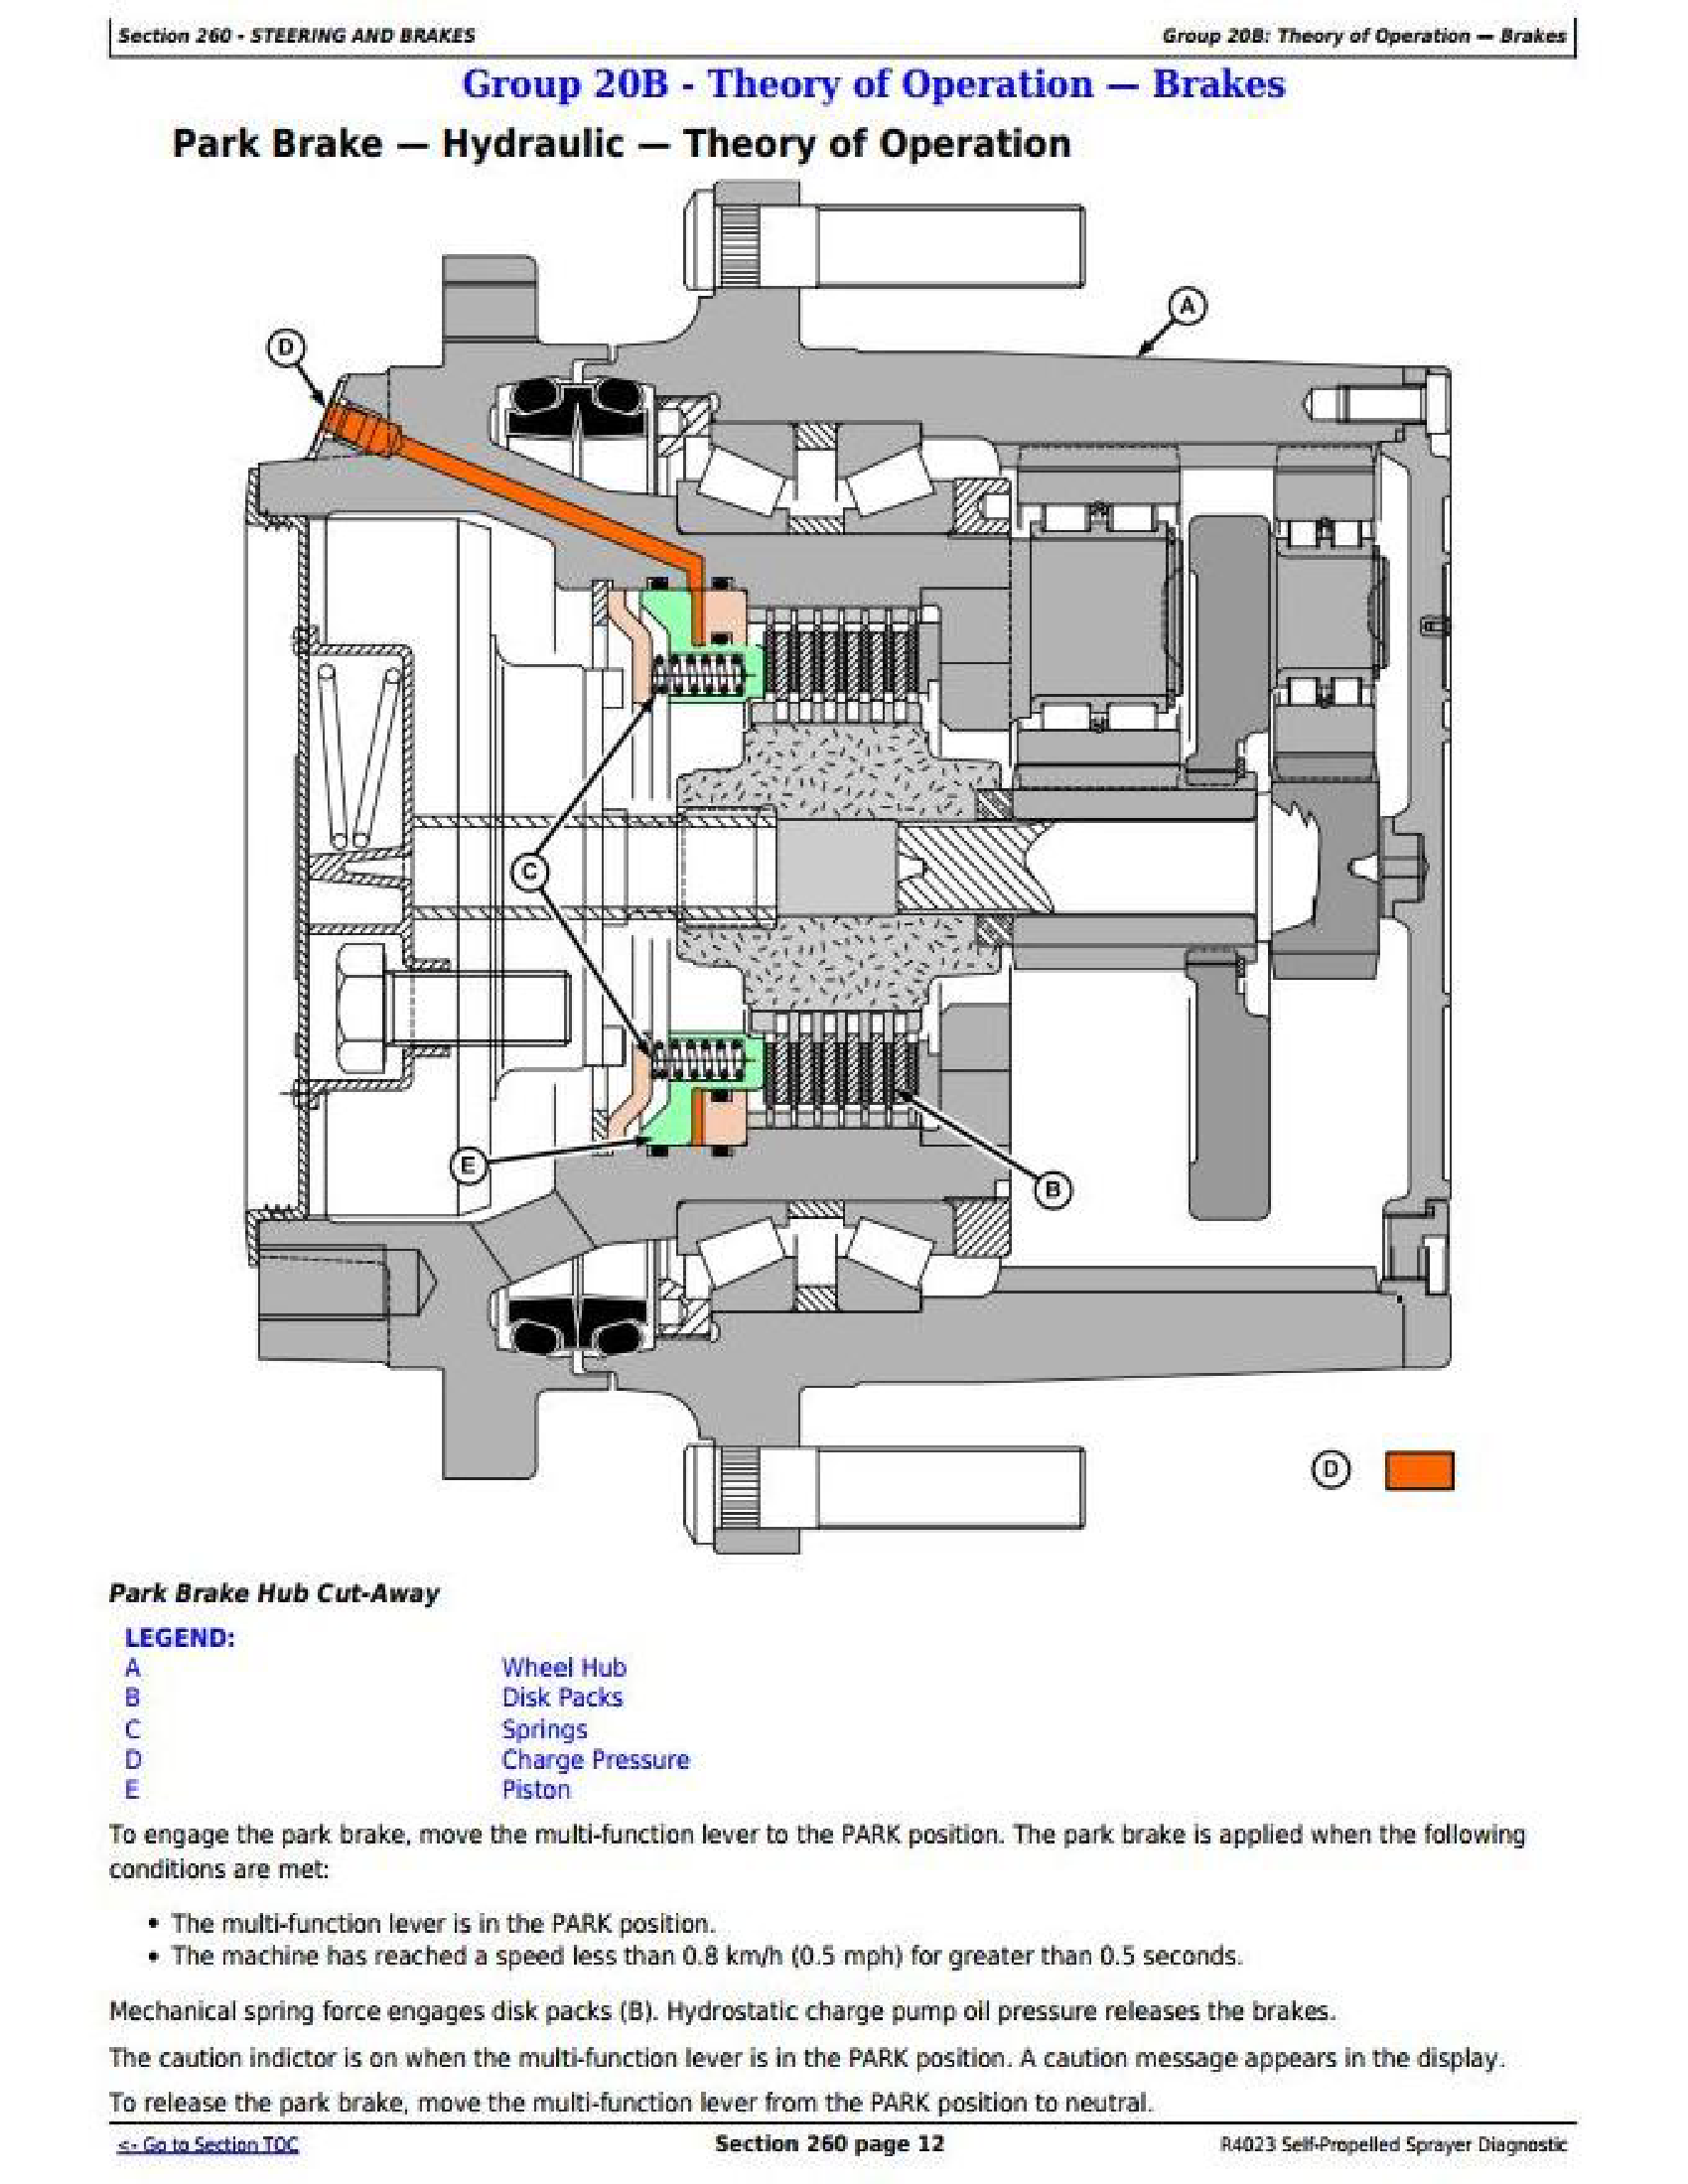 John Deere R4050i manual pdf